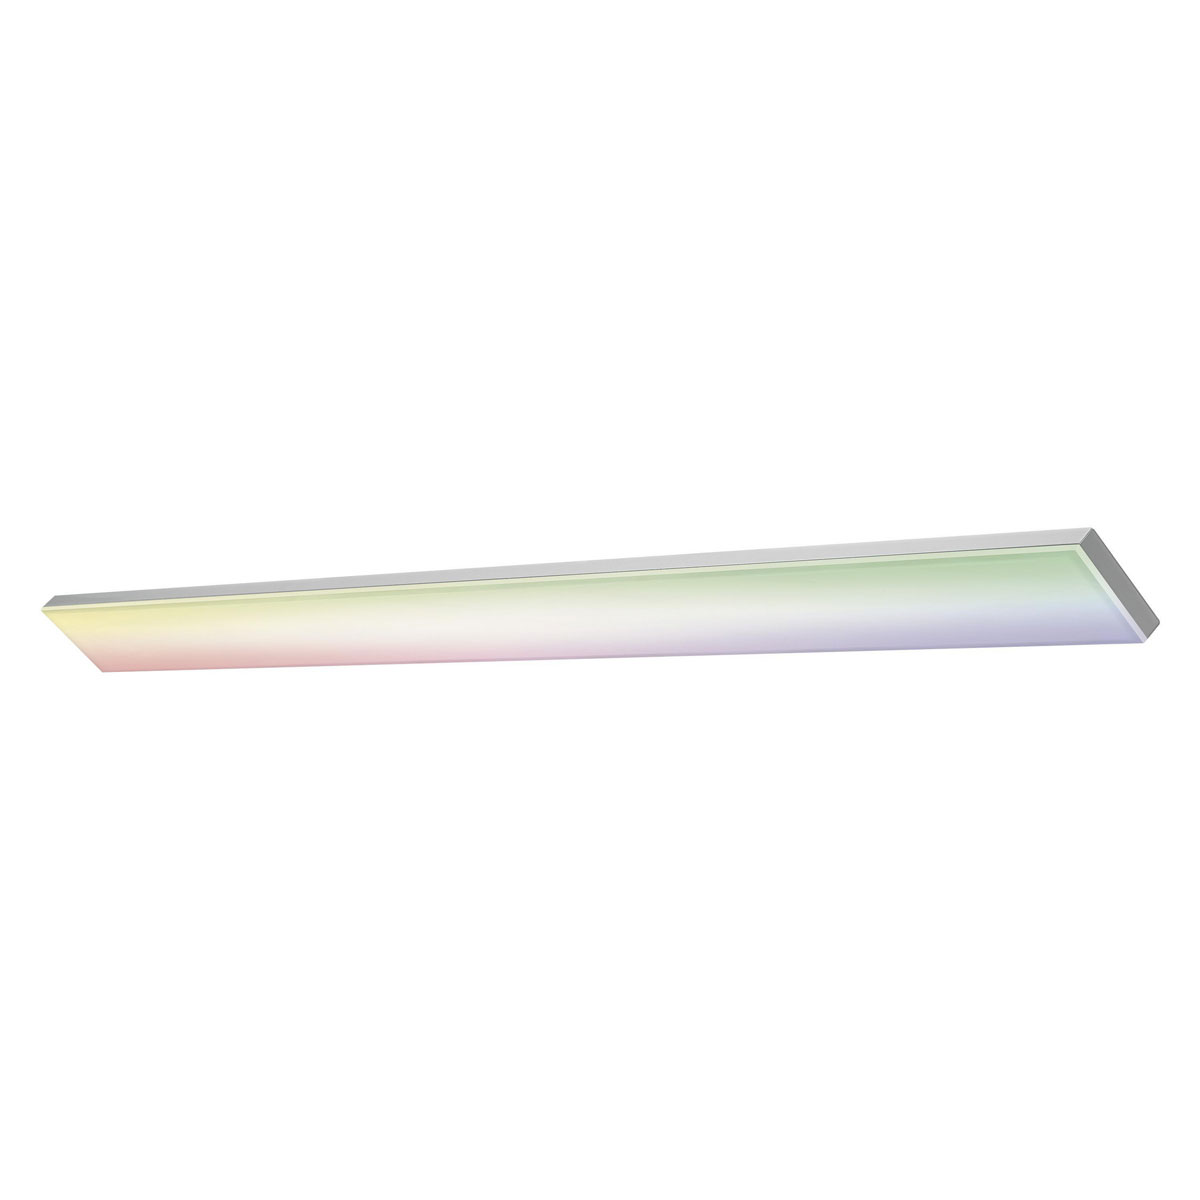 Panel „Planon“, 120x10 cm, RGBW, weiß